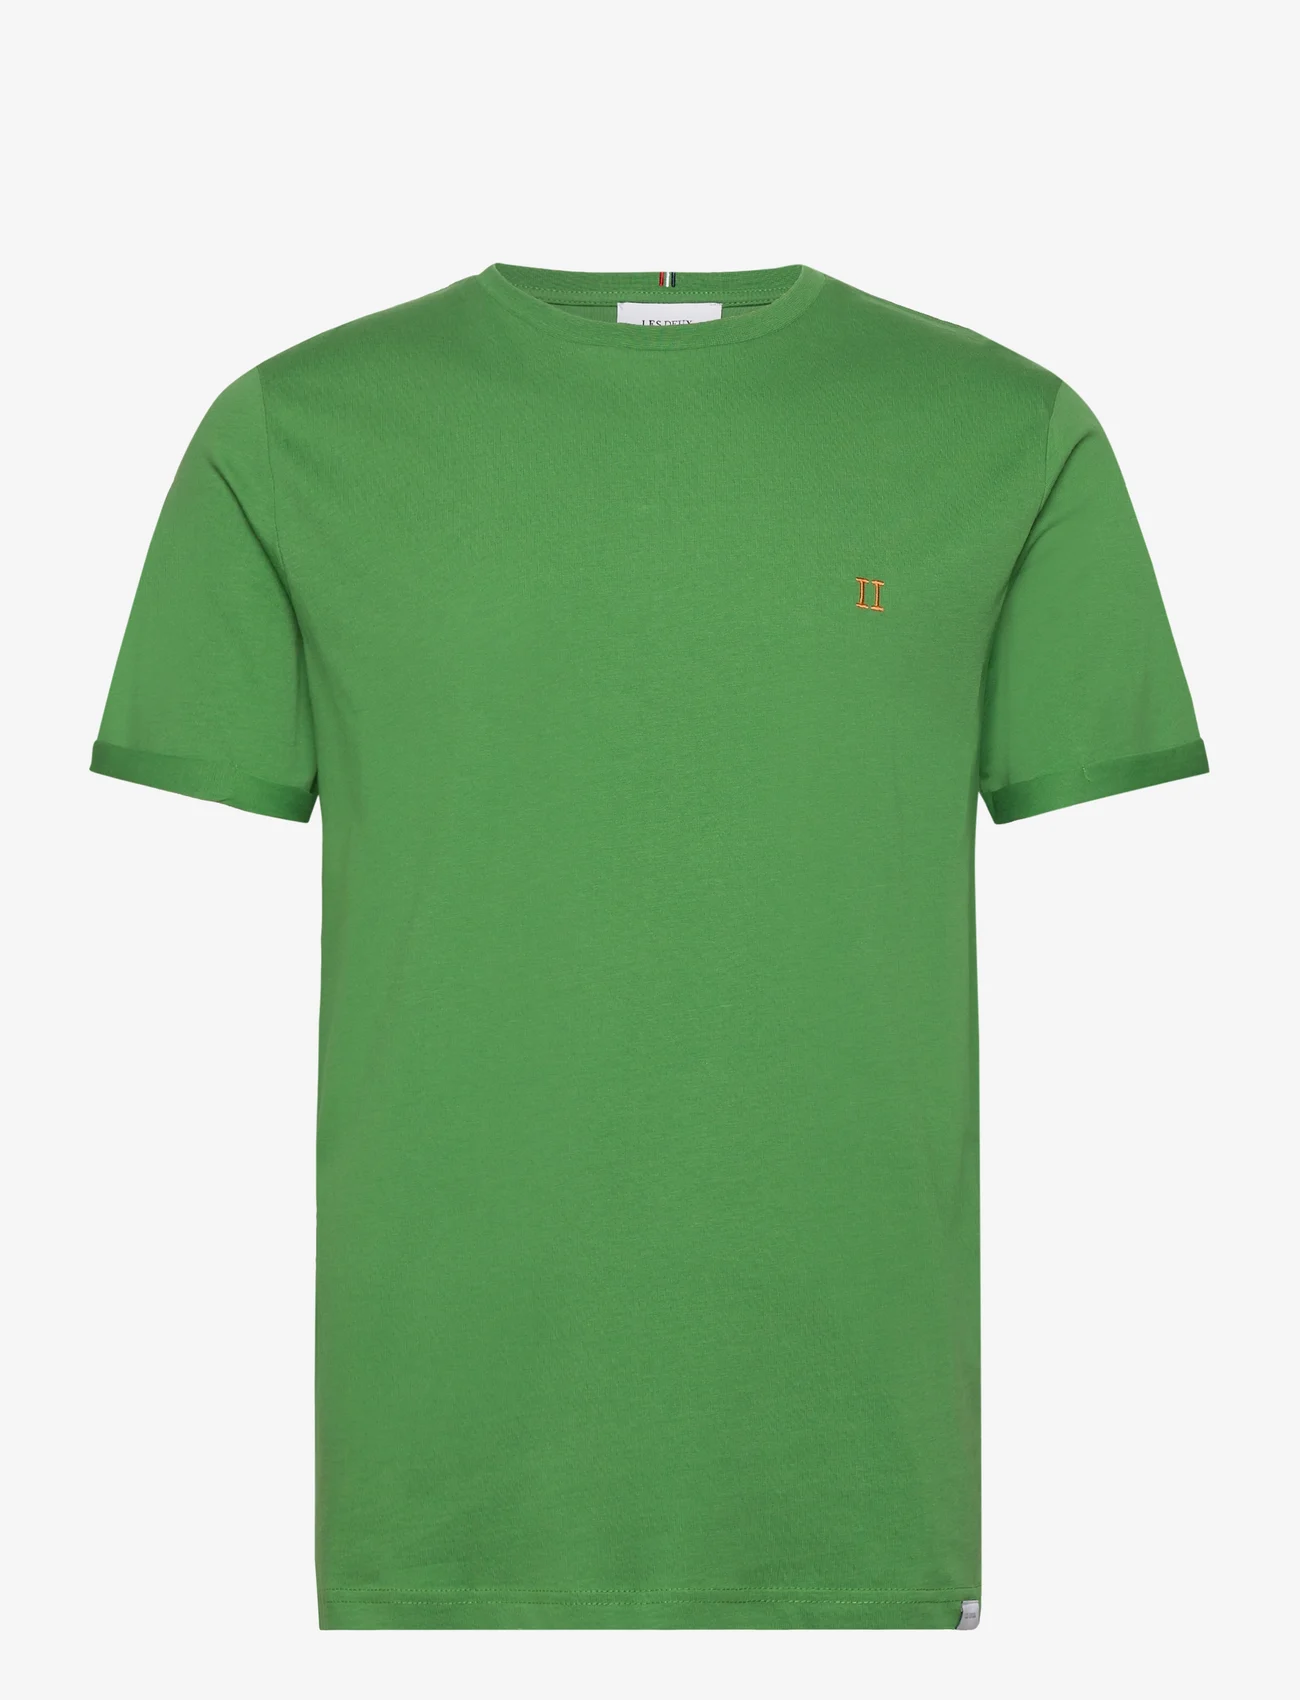 Les Deux - Nørregaard T-Shirt - Seasonal - basic t-shirts - vintage green/orange - 0